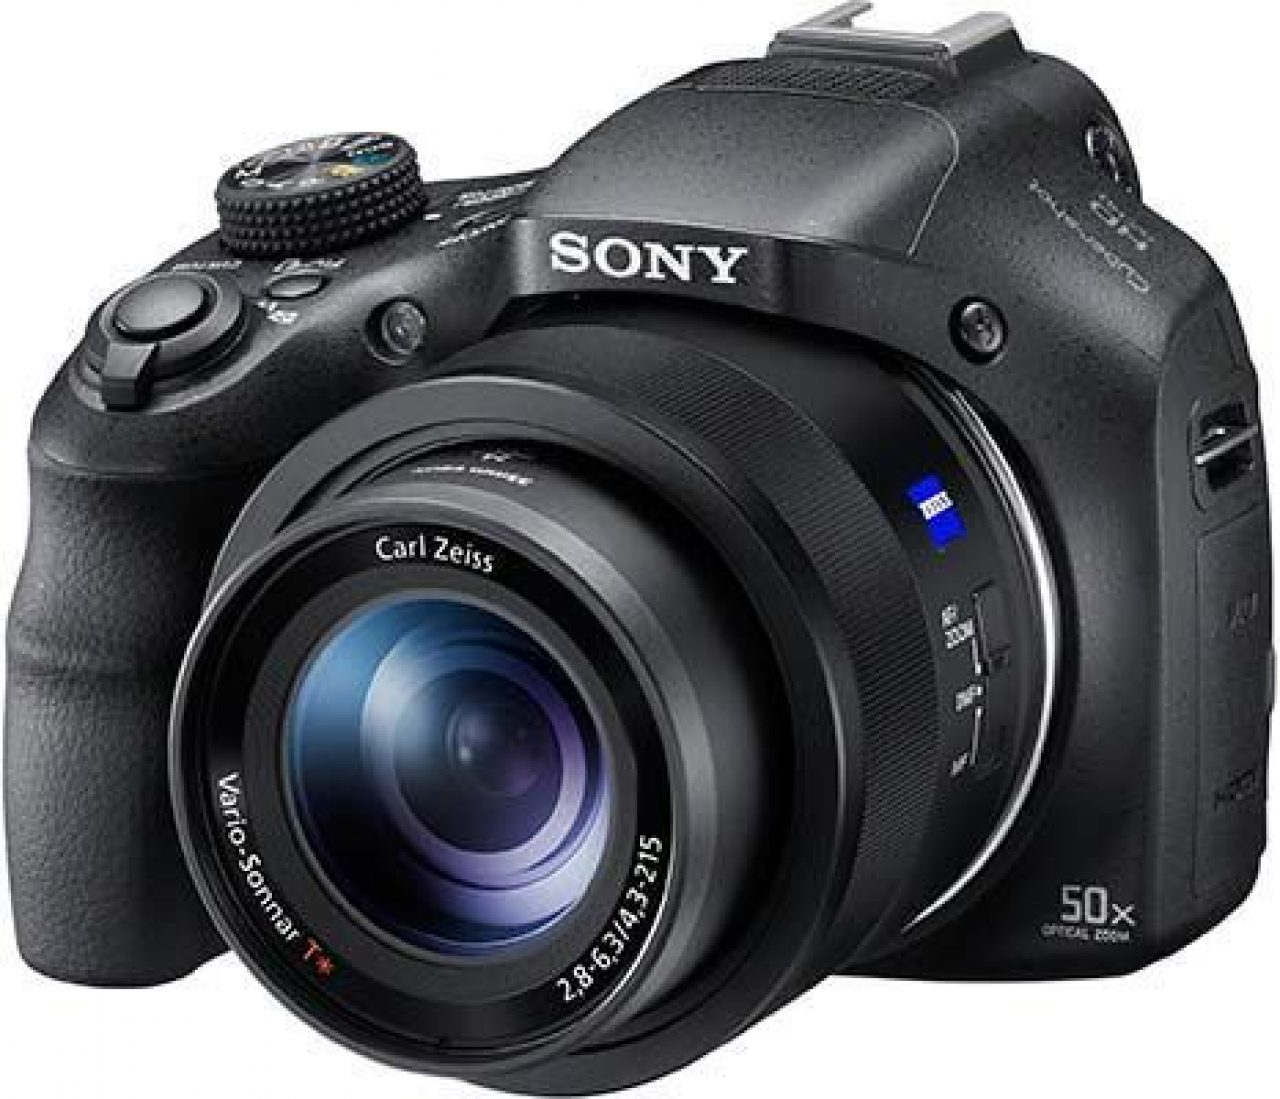 Replacement Lens Cap Cover for Sony HX400 HX300 DSC-HX300 & DSC-H400 Digital Camera 